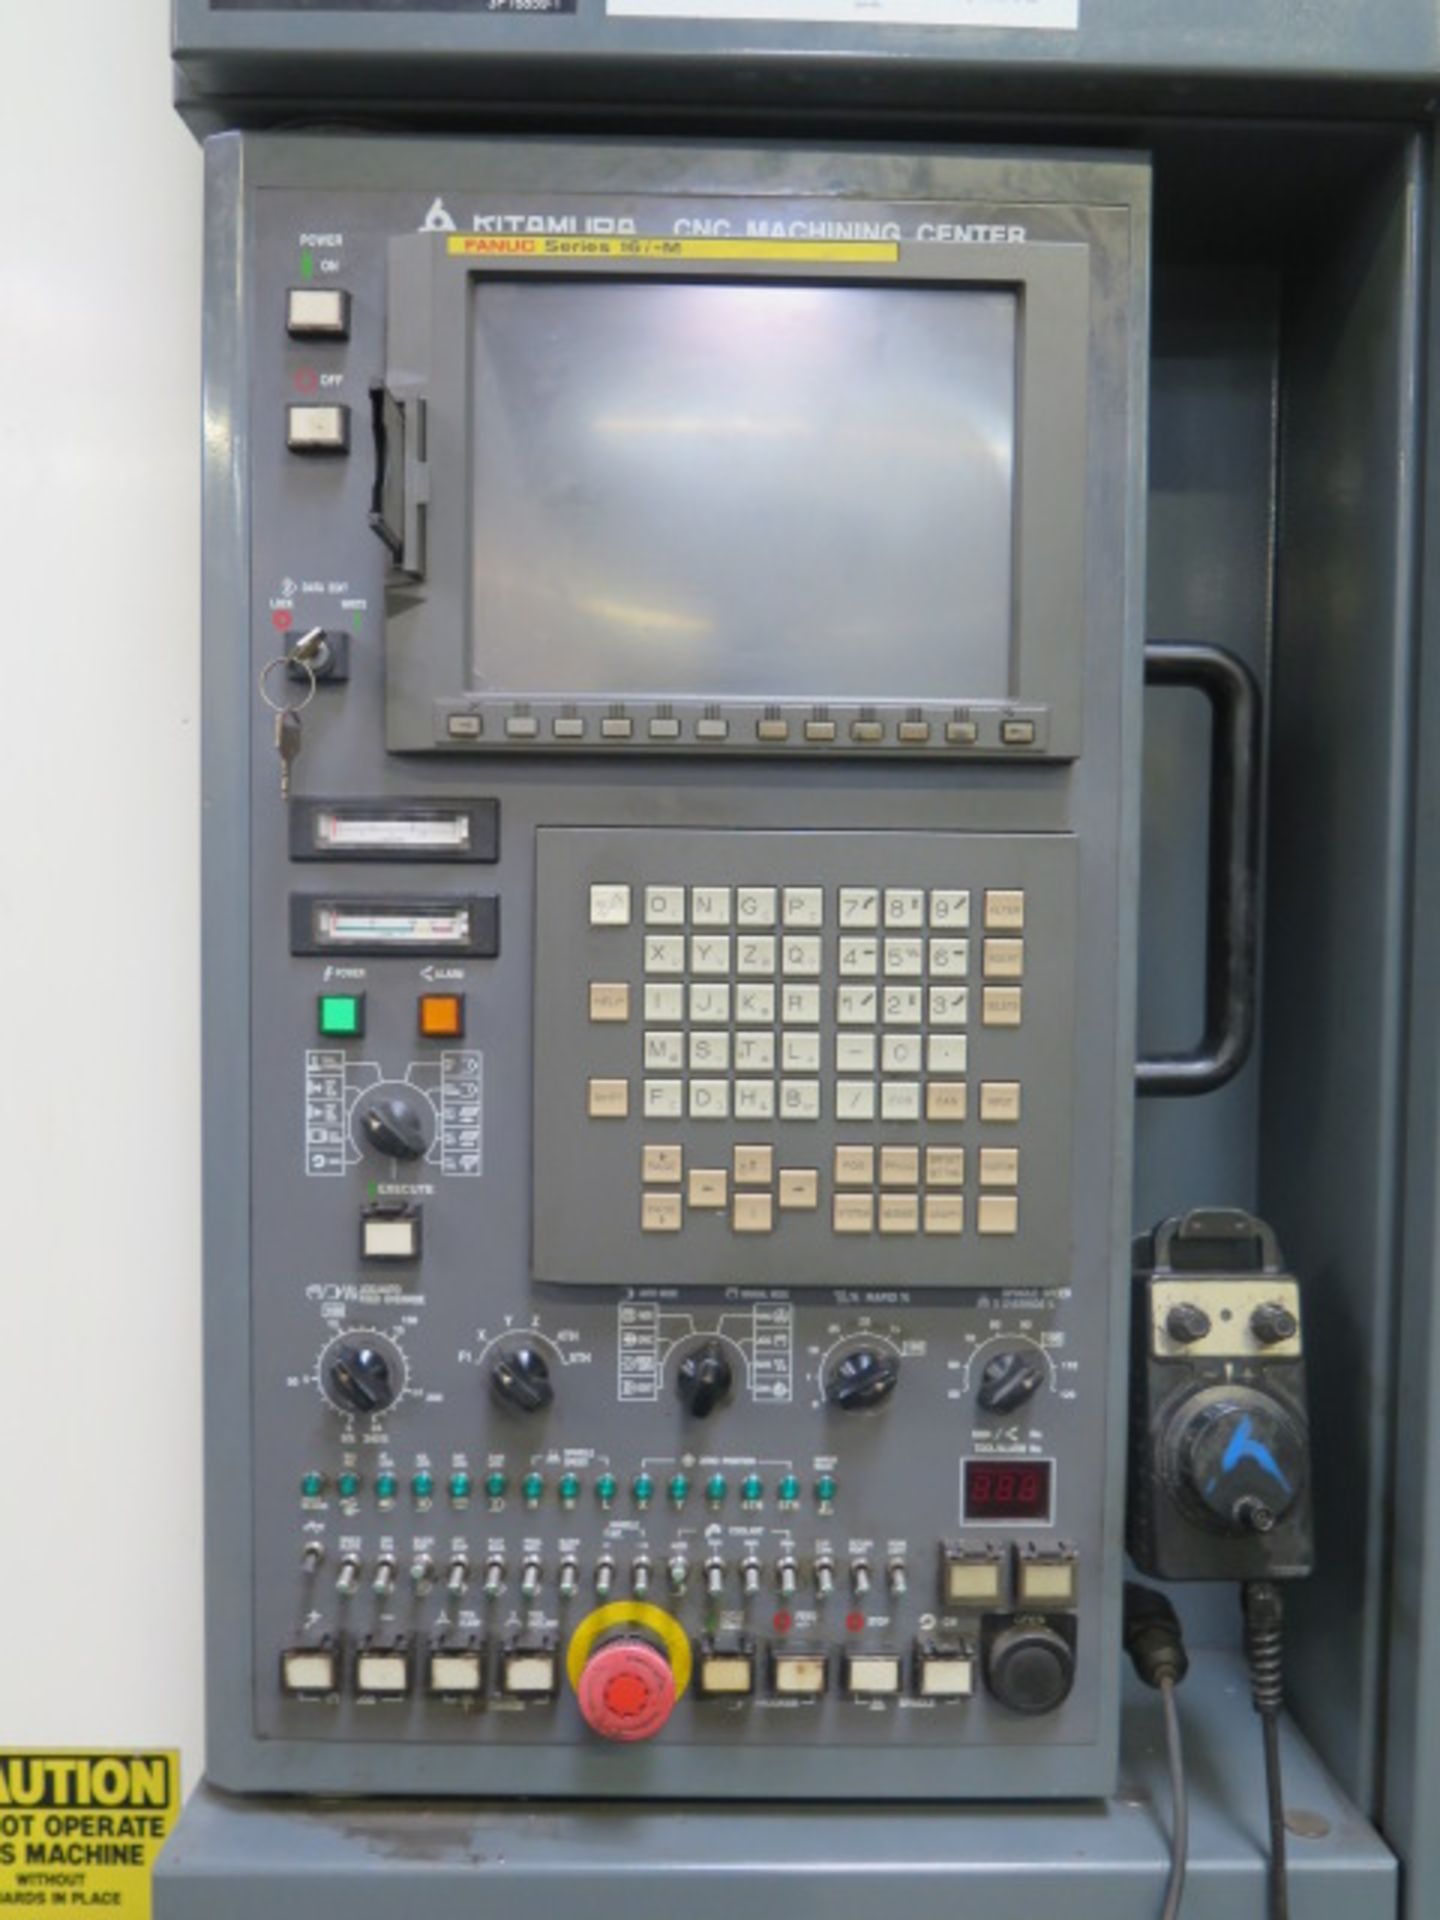 Kitamura Mycenter-HX500i 2-Pallet 4-Axis CNC Horizontal Machining Center s/n 43188 w/ Fanuc Series - Image 5 of 17